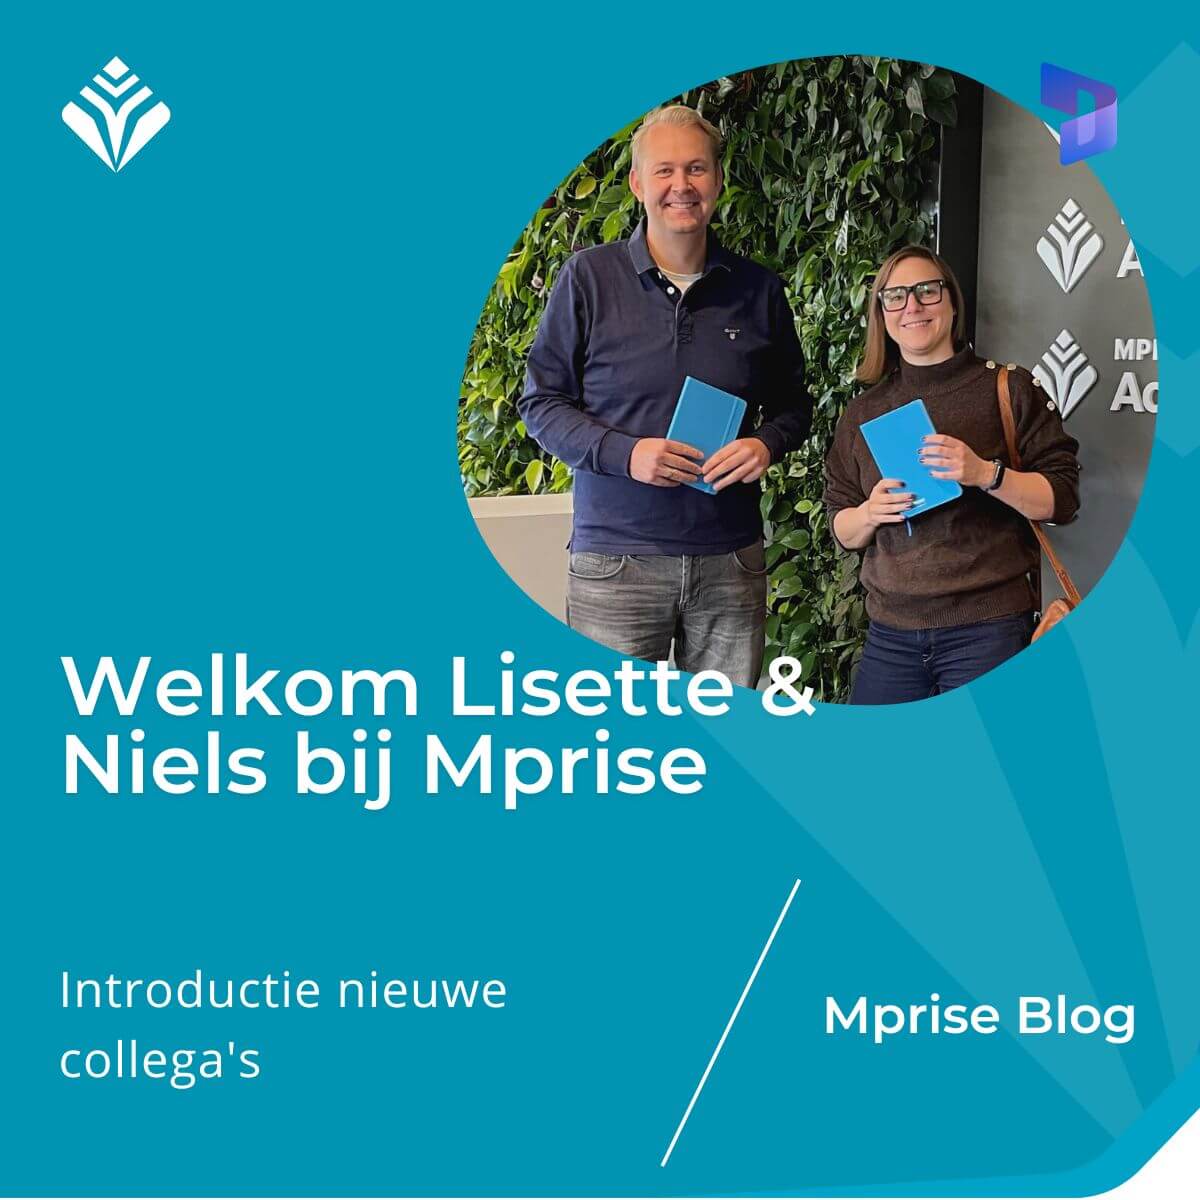 Introducing! Onze nieuwe collega's Lisette en Niels